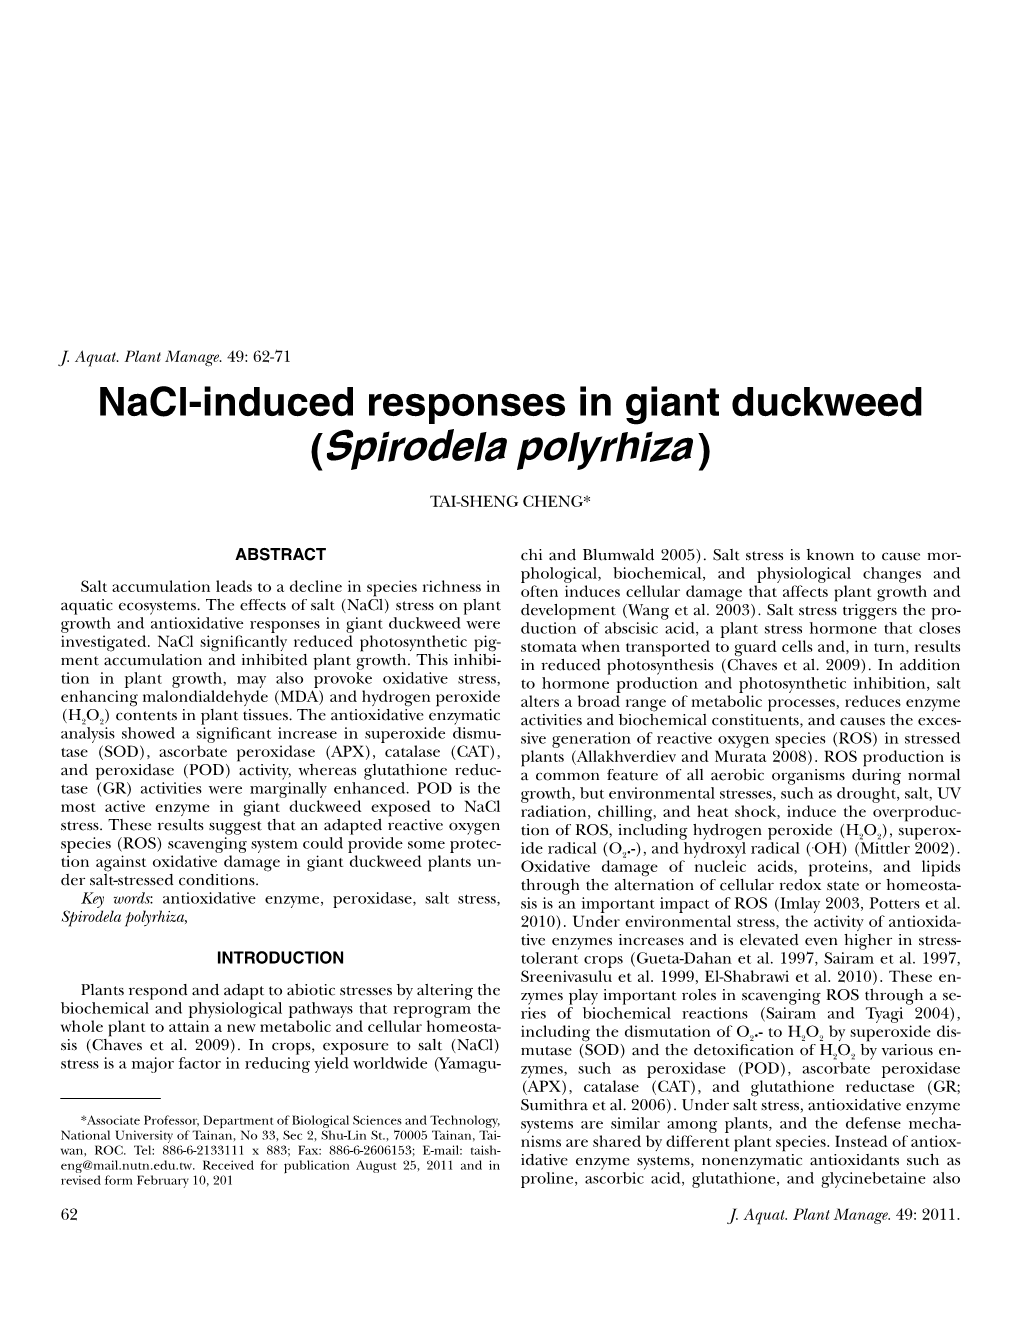 Nacl-Induced Responses in Giant Duckweed (Spirodela Polyrhiza)